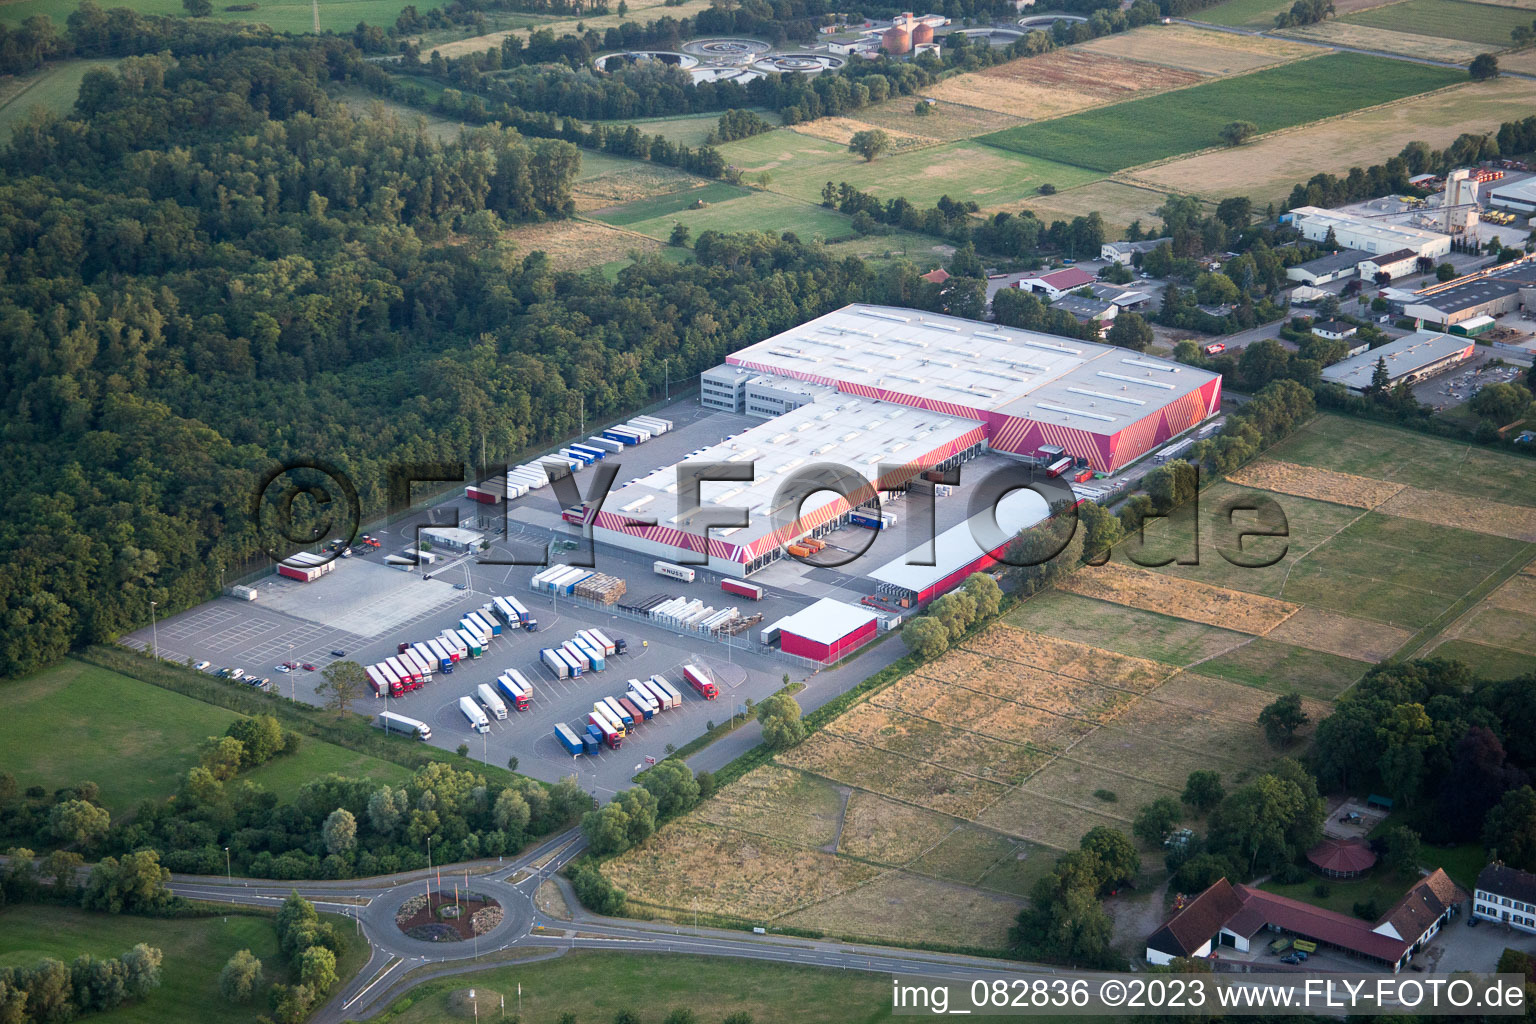 Building of the construction market of Hornbach Zentrale in the district Industriegebiet Bornheim in Bornheim in the state Rhineland-Palatinate